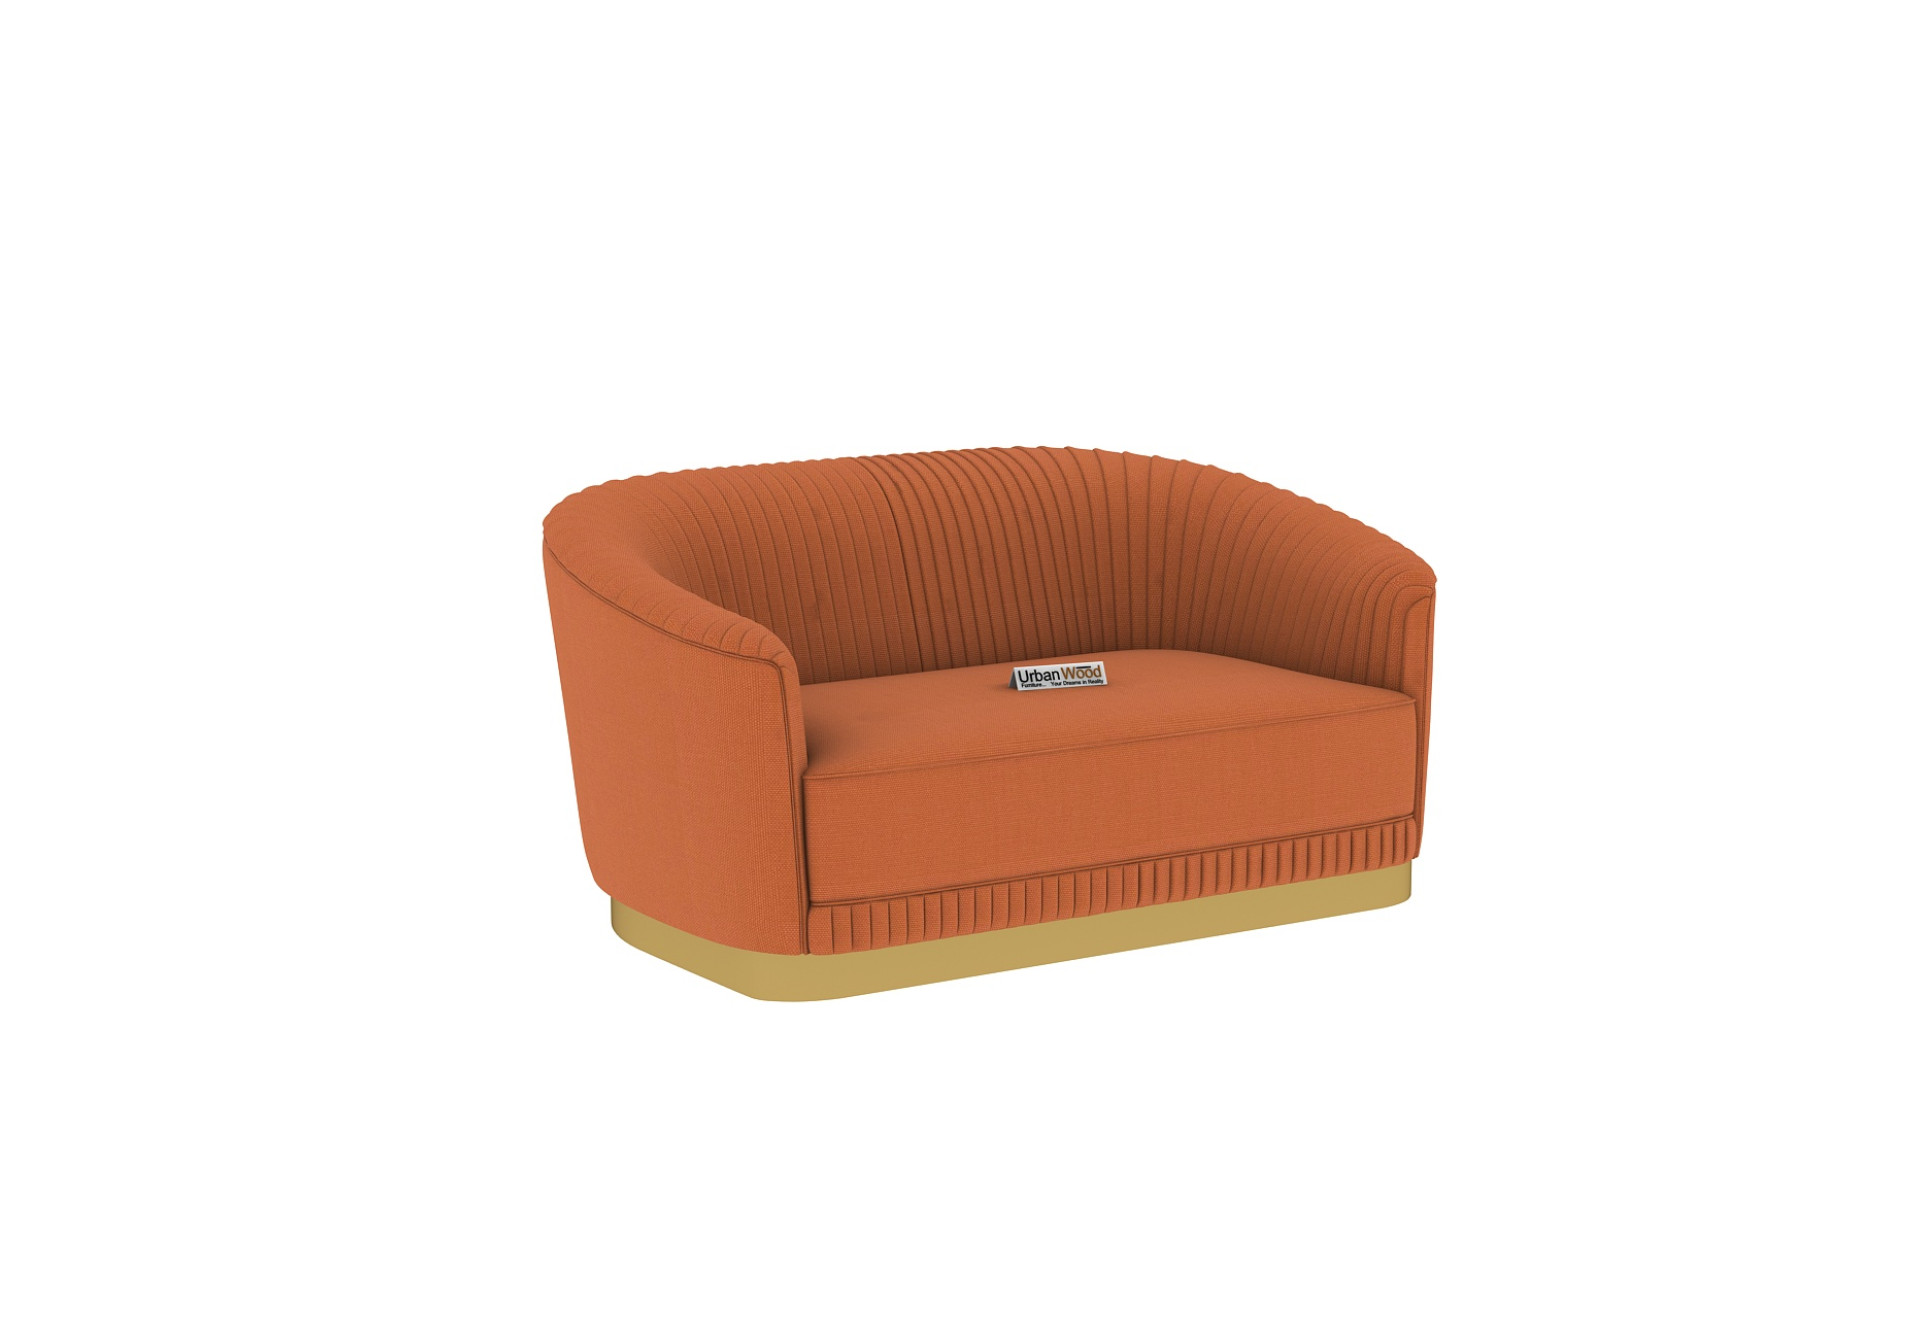 Roy 2 Seater Fabric Sofa (Cotton, Diana Orange)